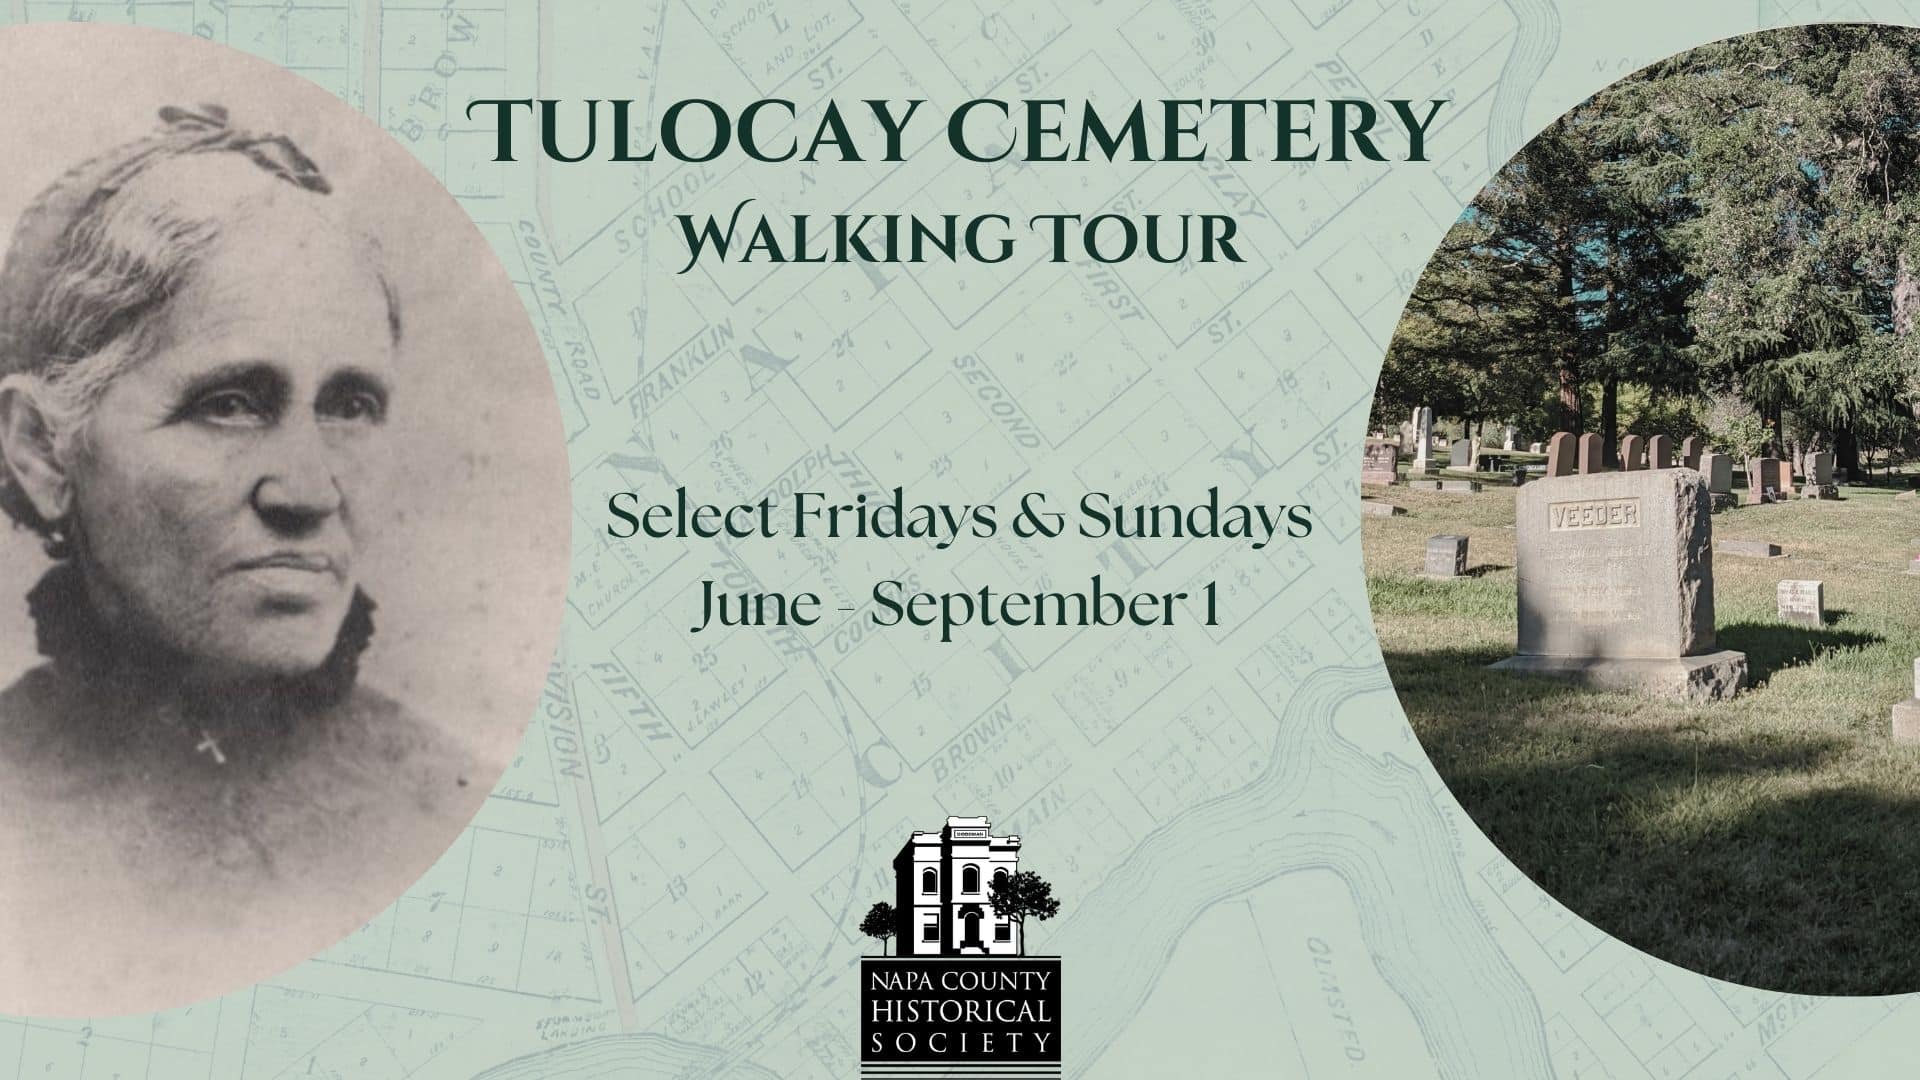 Tulocay Cemetery Walking Tour, Select Fridays & Sundays, May - September 1